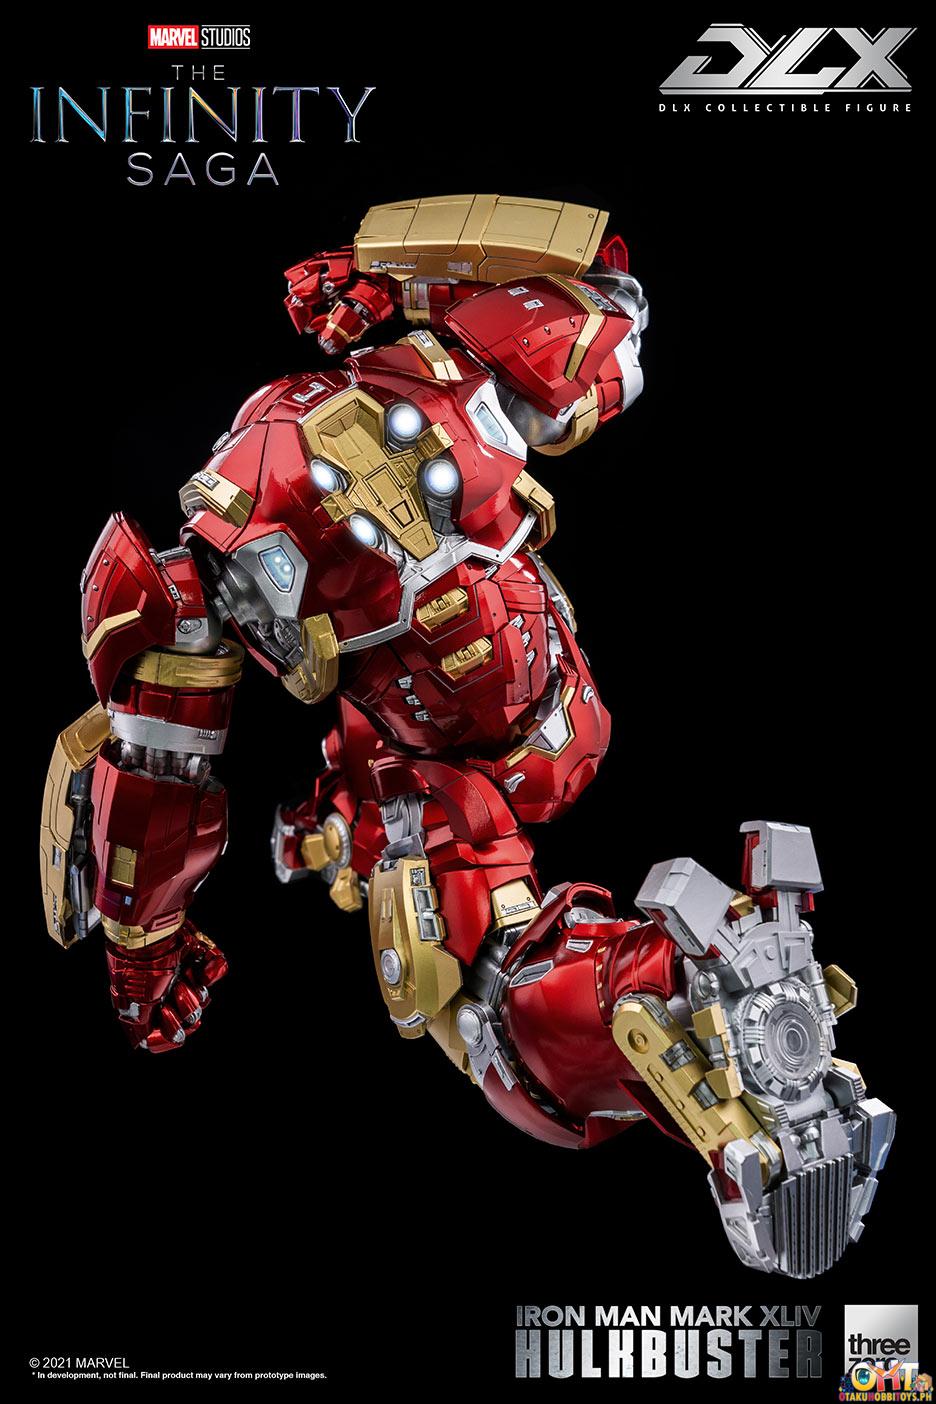 [RE-OFFER] ThreeZero DLX Iron Man Mark 44 “Hulkbuster” - Infinity Saga